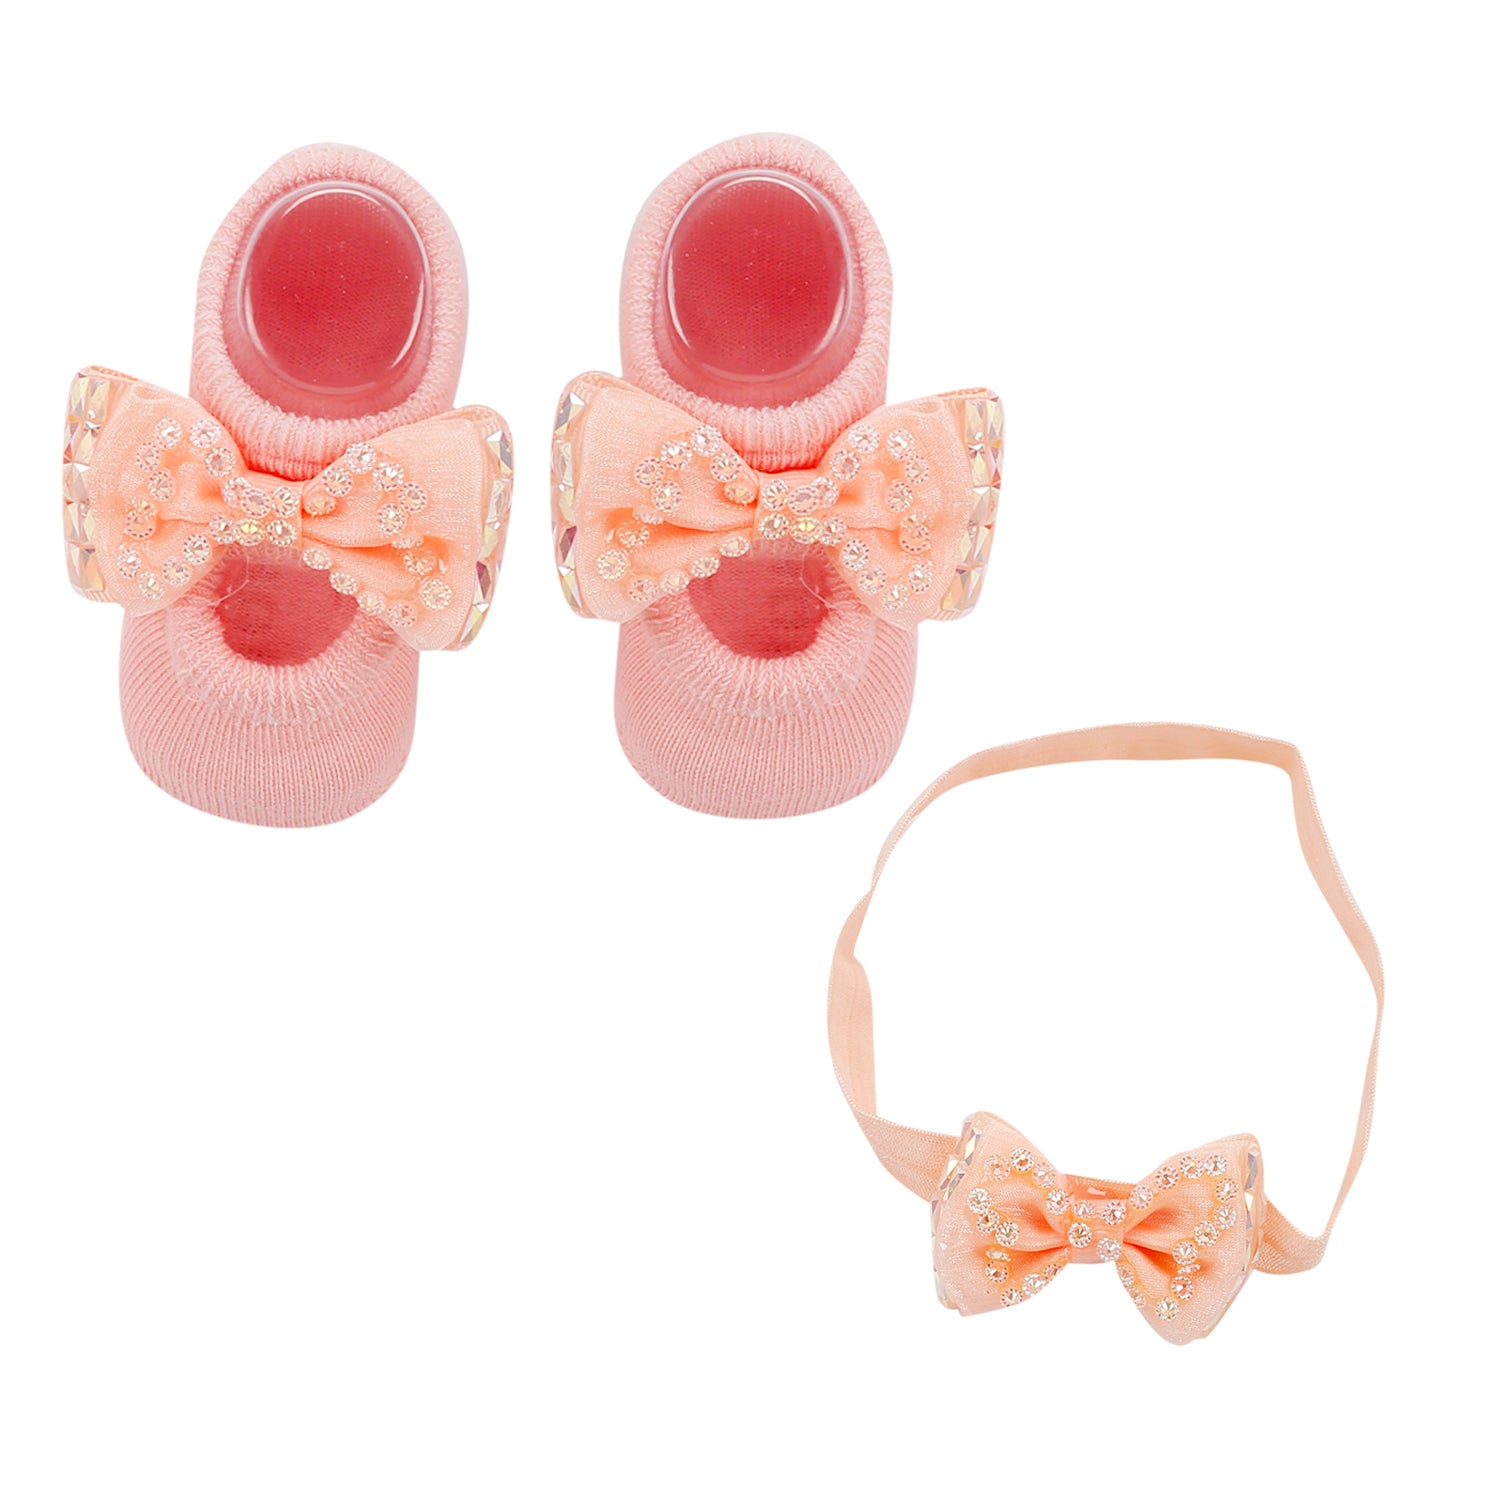 Bedazzled Peach Headband And Socks Set - Baby Moo